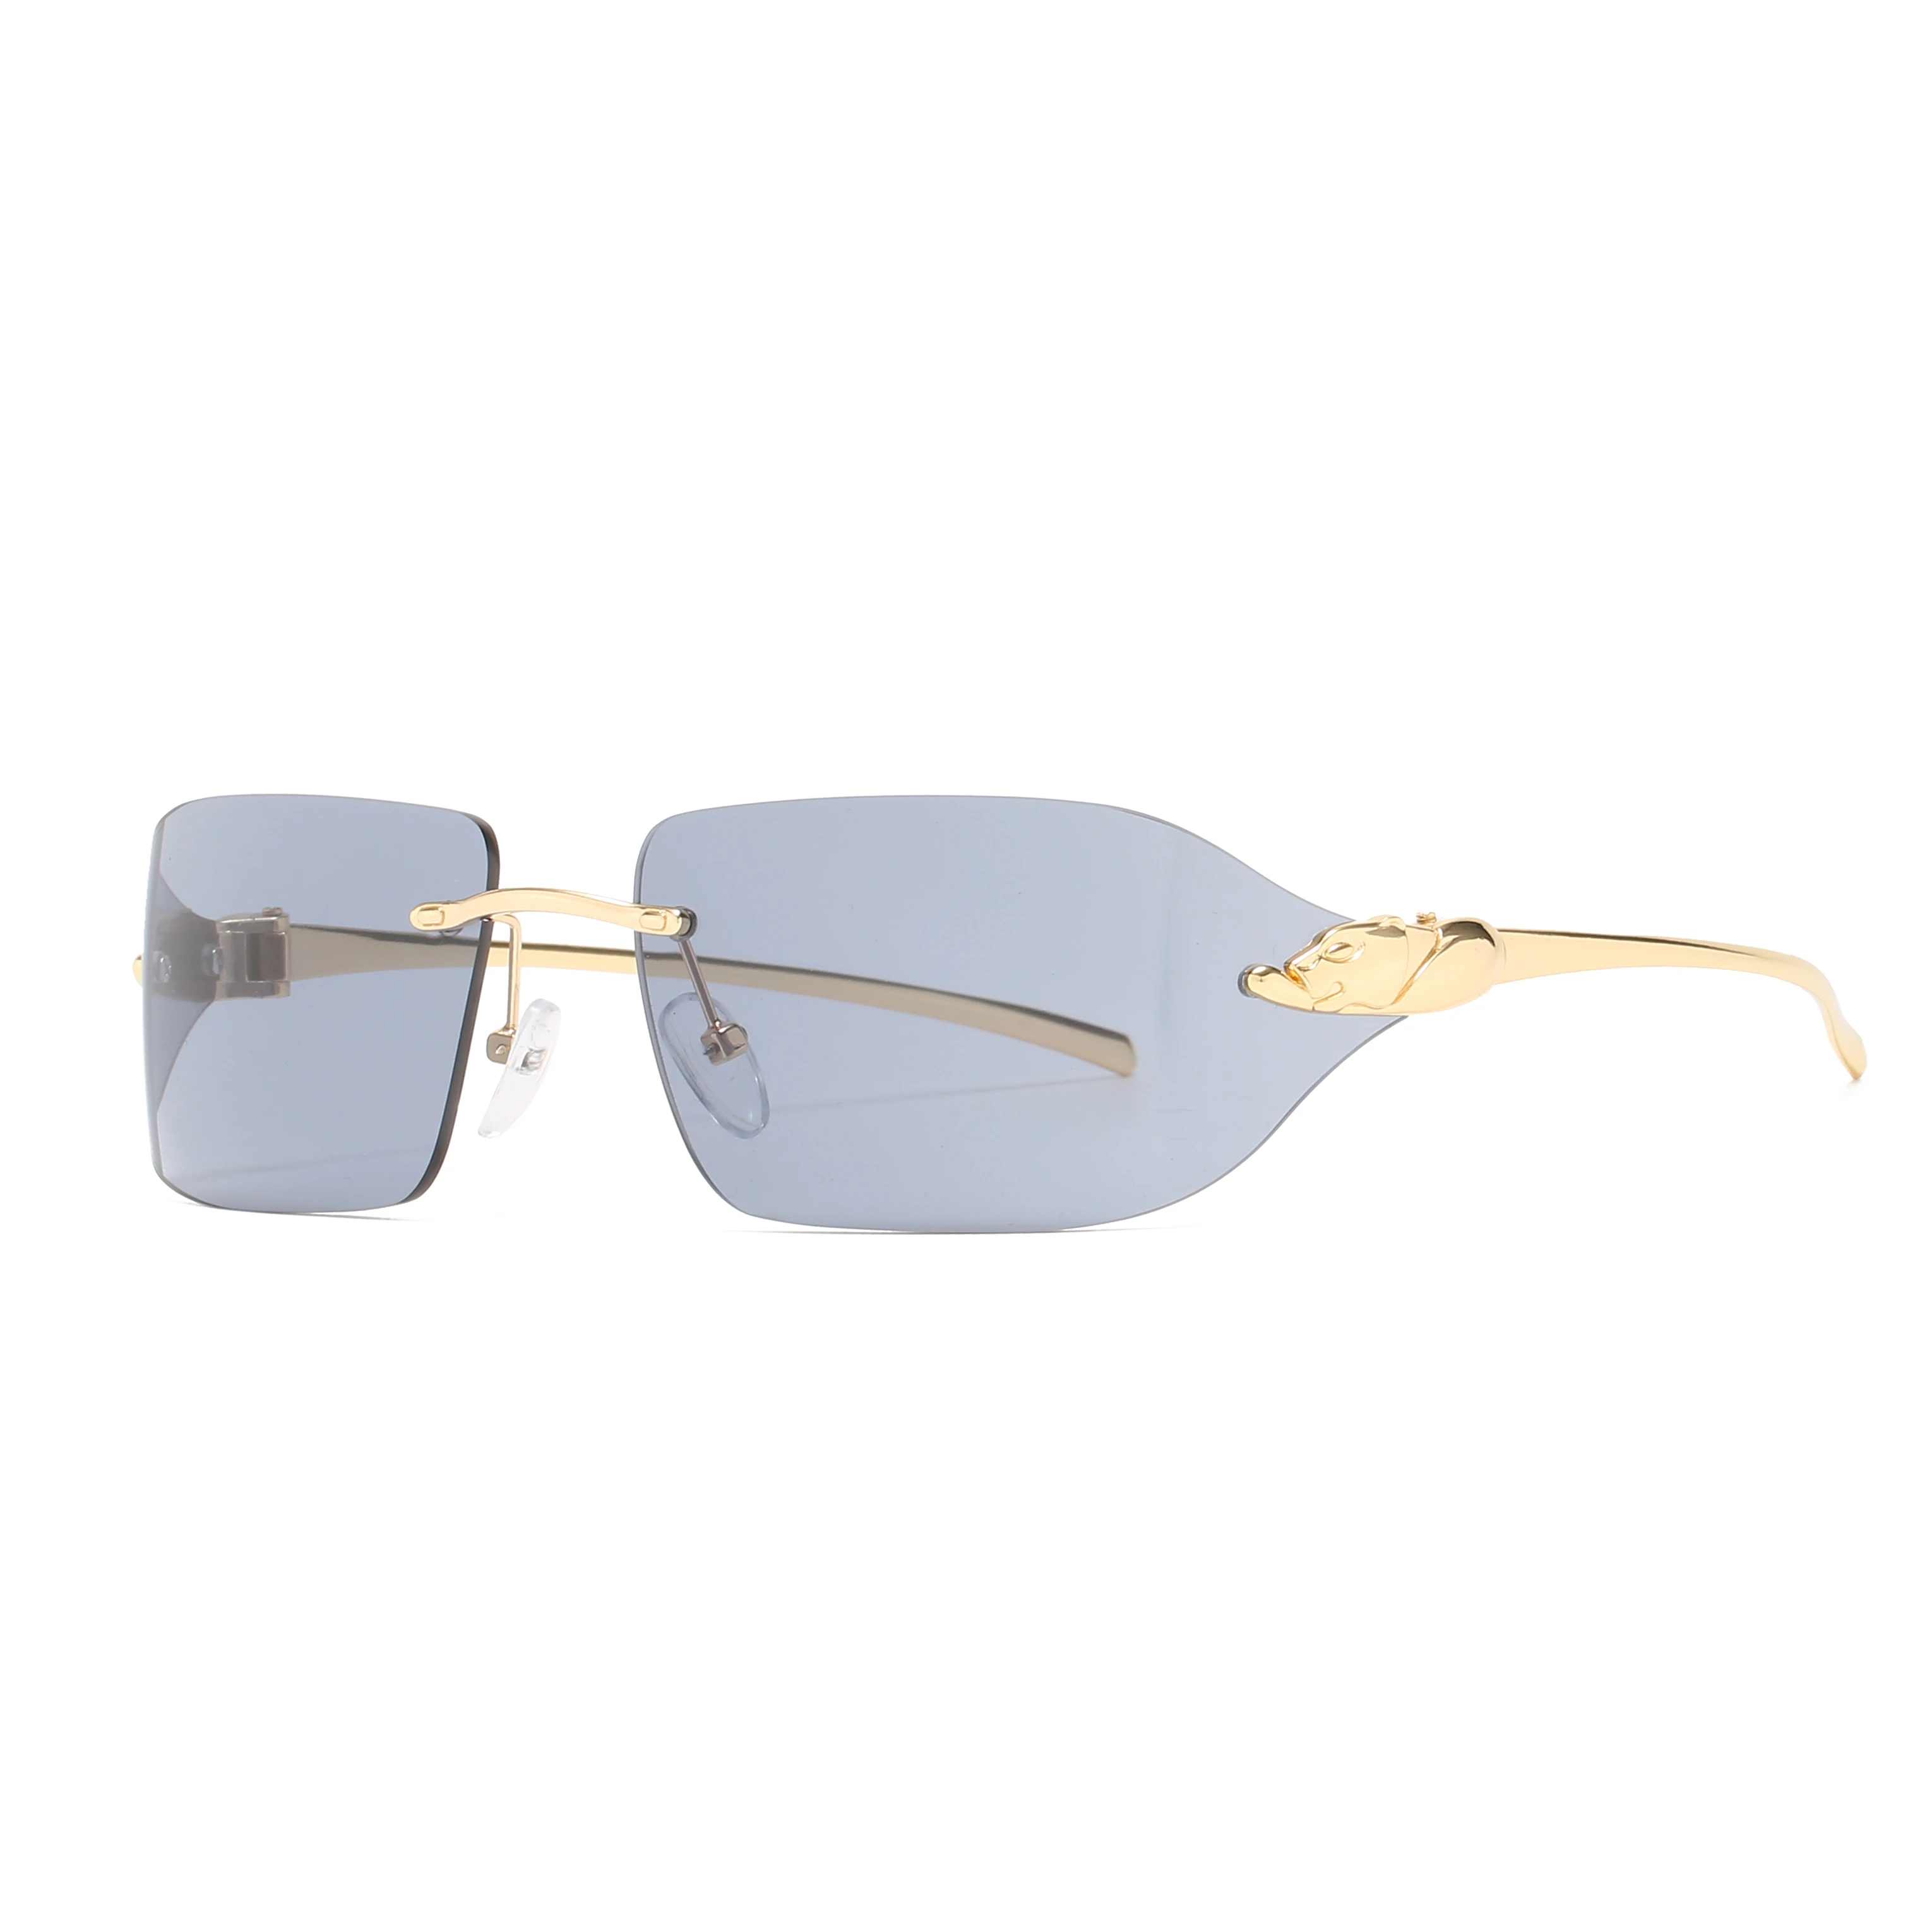 sunglass counter top display mercedes sunglasses Round Sun glasses